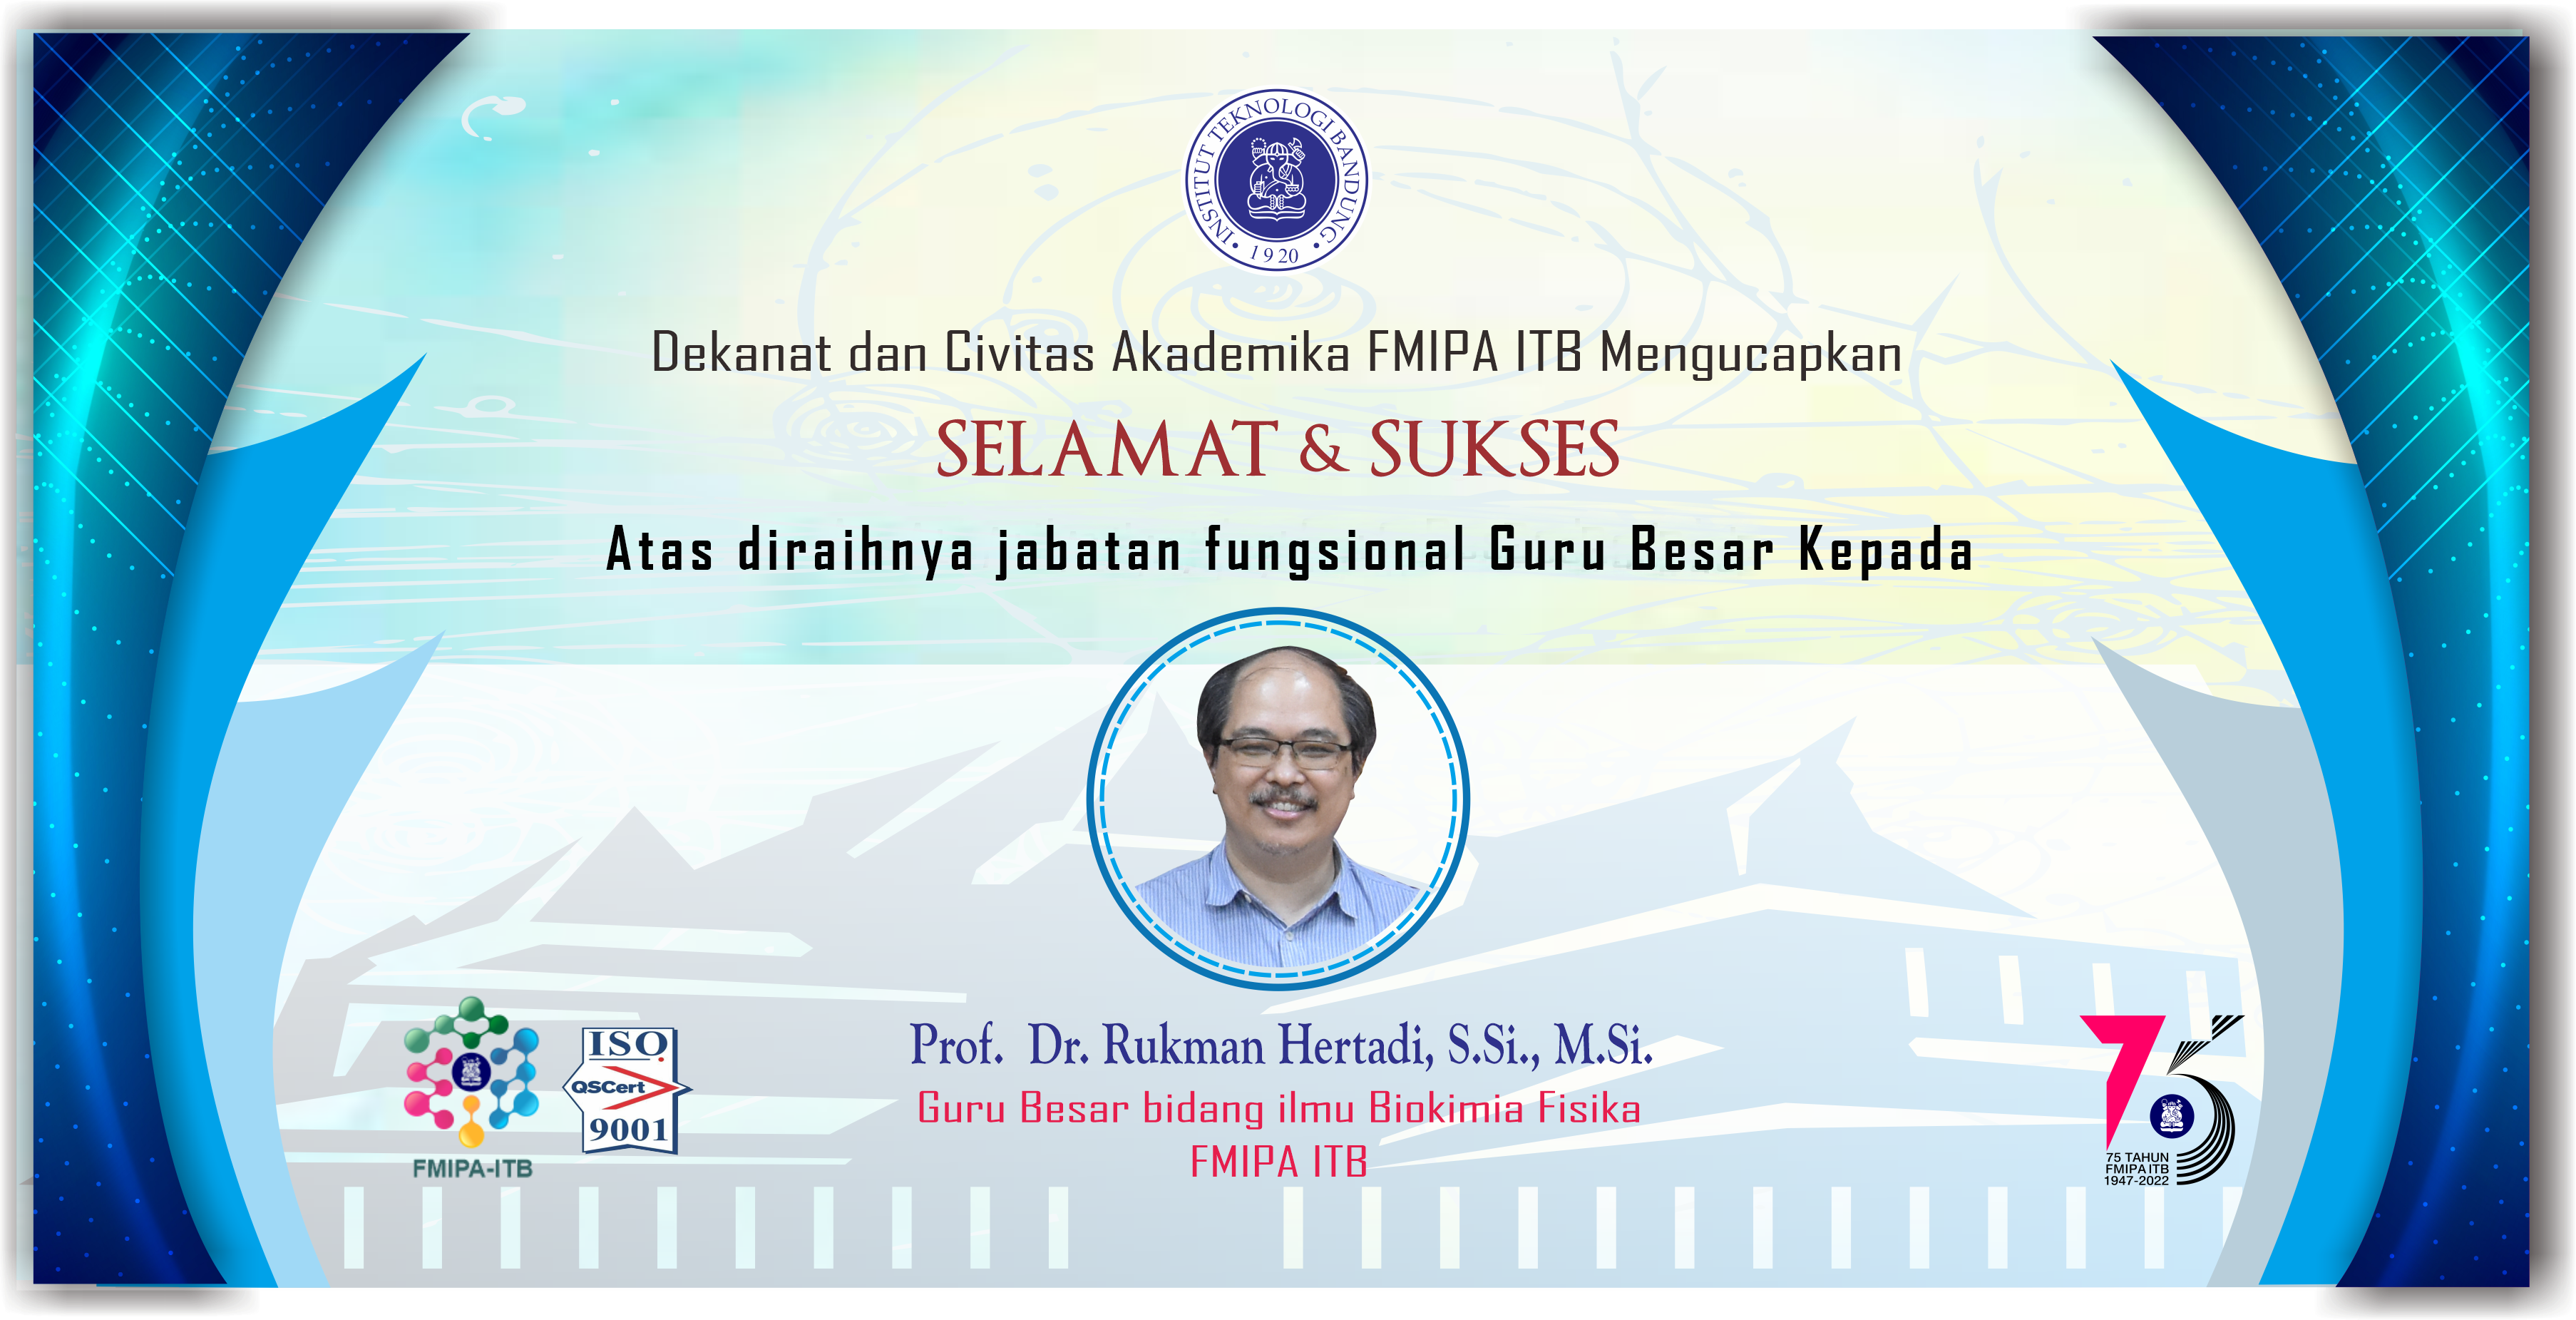 Jabatan Fungsional Guru Besar bidang ilmu Biokimia Fisika FMIPA ITB, Prof.  Dr. Rukman Hertadi, S.Si., M.Si.